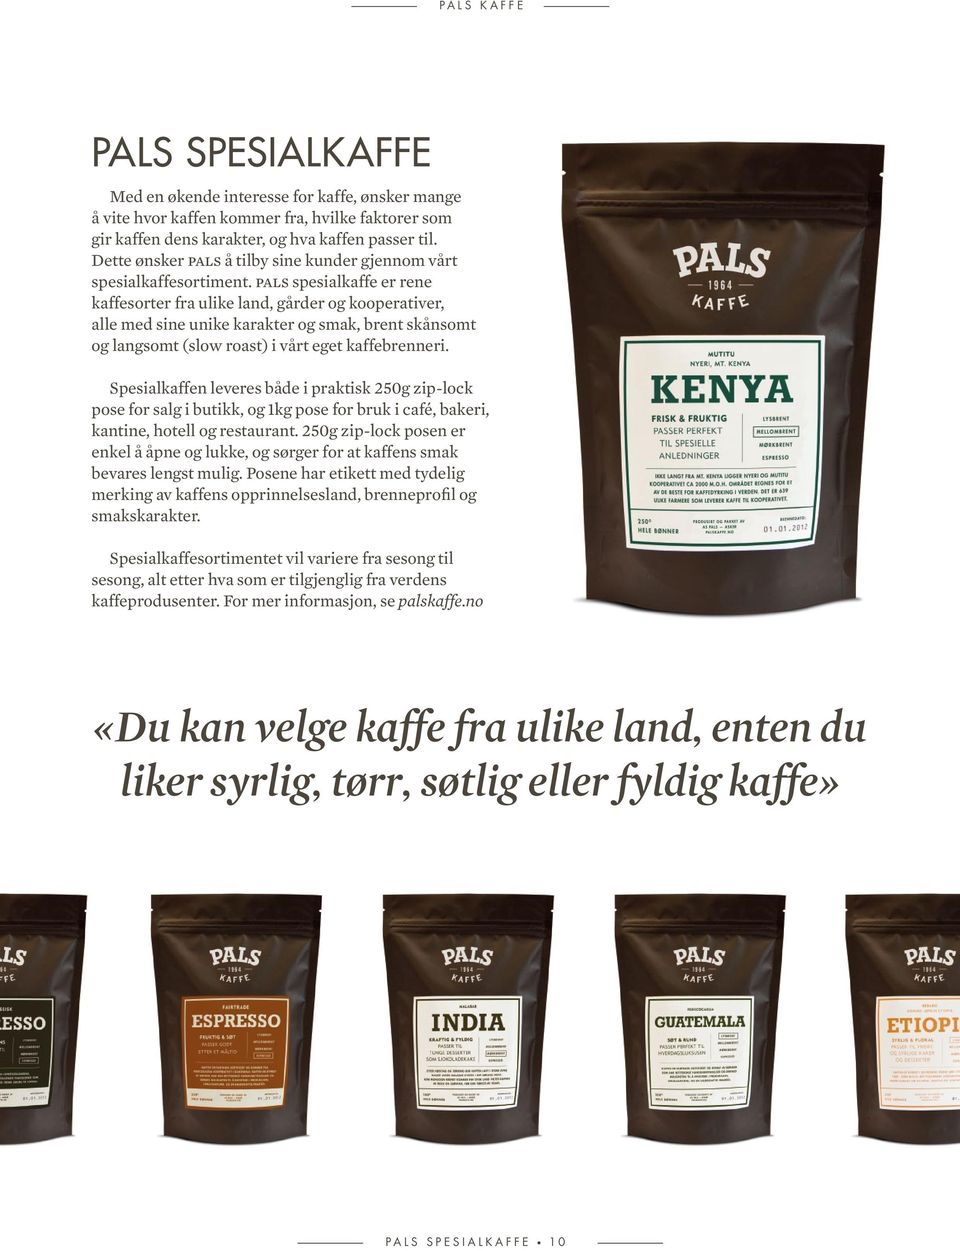 pals spesialkaffe er rene kaffesorter fra ulike land, gårder og kooperativer, alle med sine unike karakter og smak, brent skånsomt og langsomt (slow roast) i vårt eget kaffebrenneri.